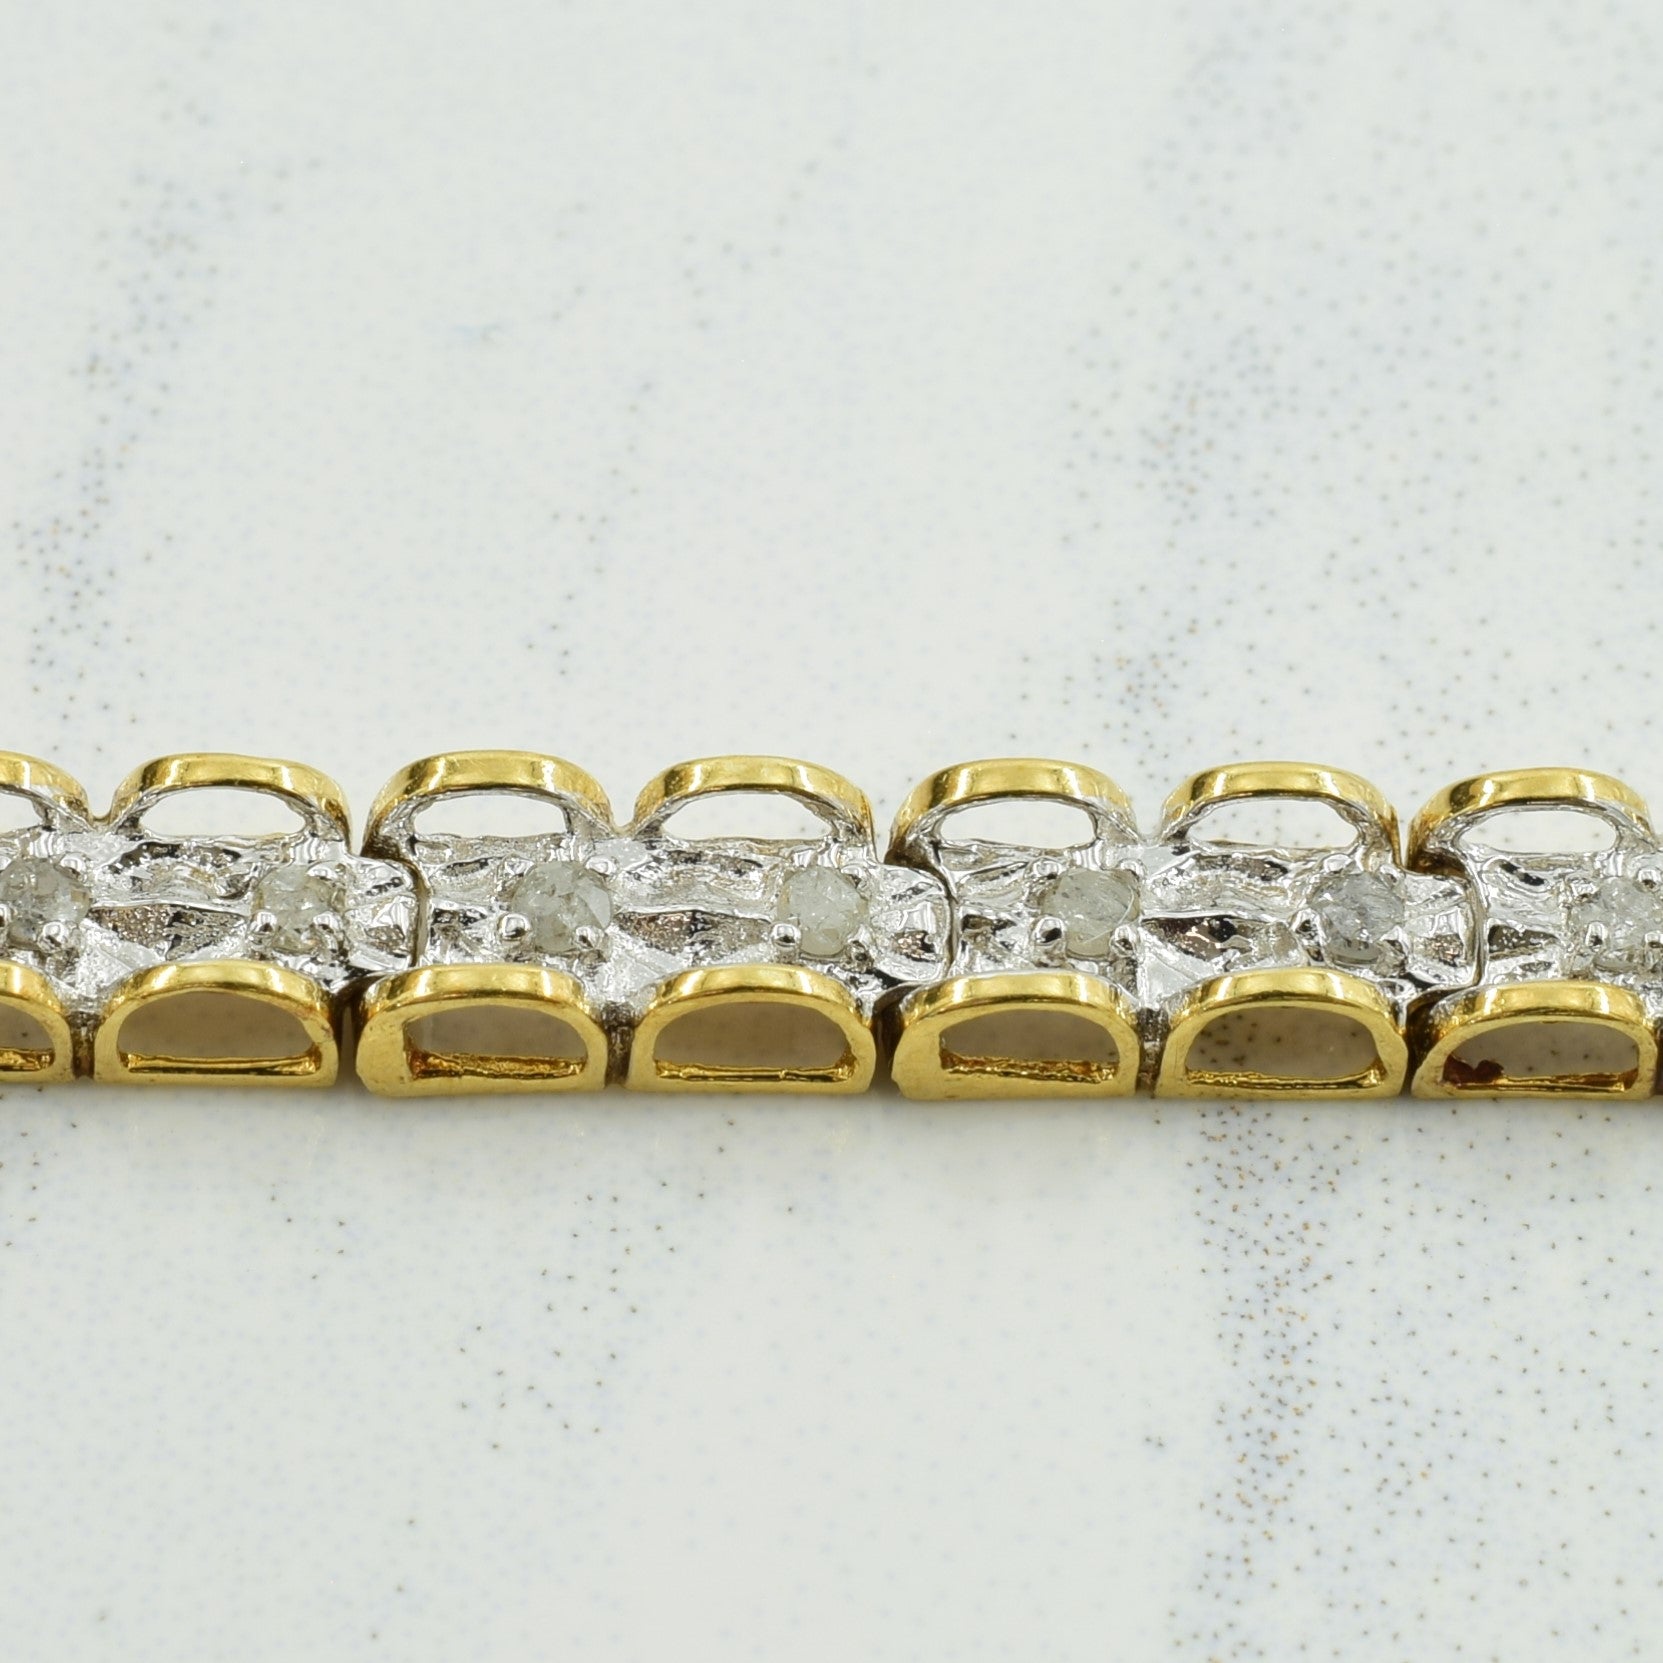 10k Yellow Gold Diamond Tennis Bracelet | 0.33ctw | 7